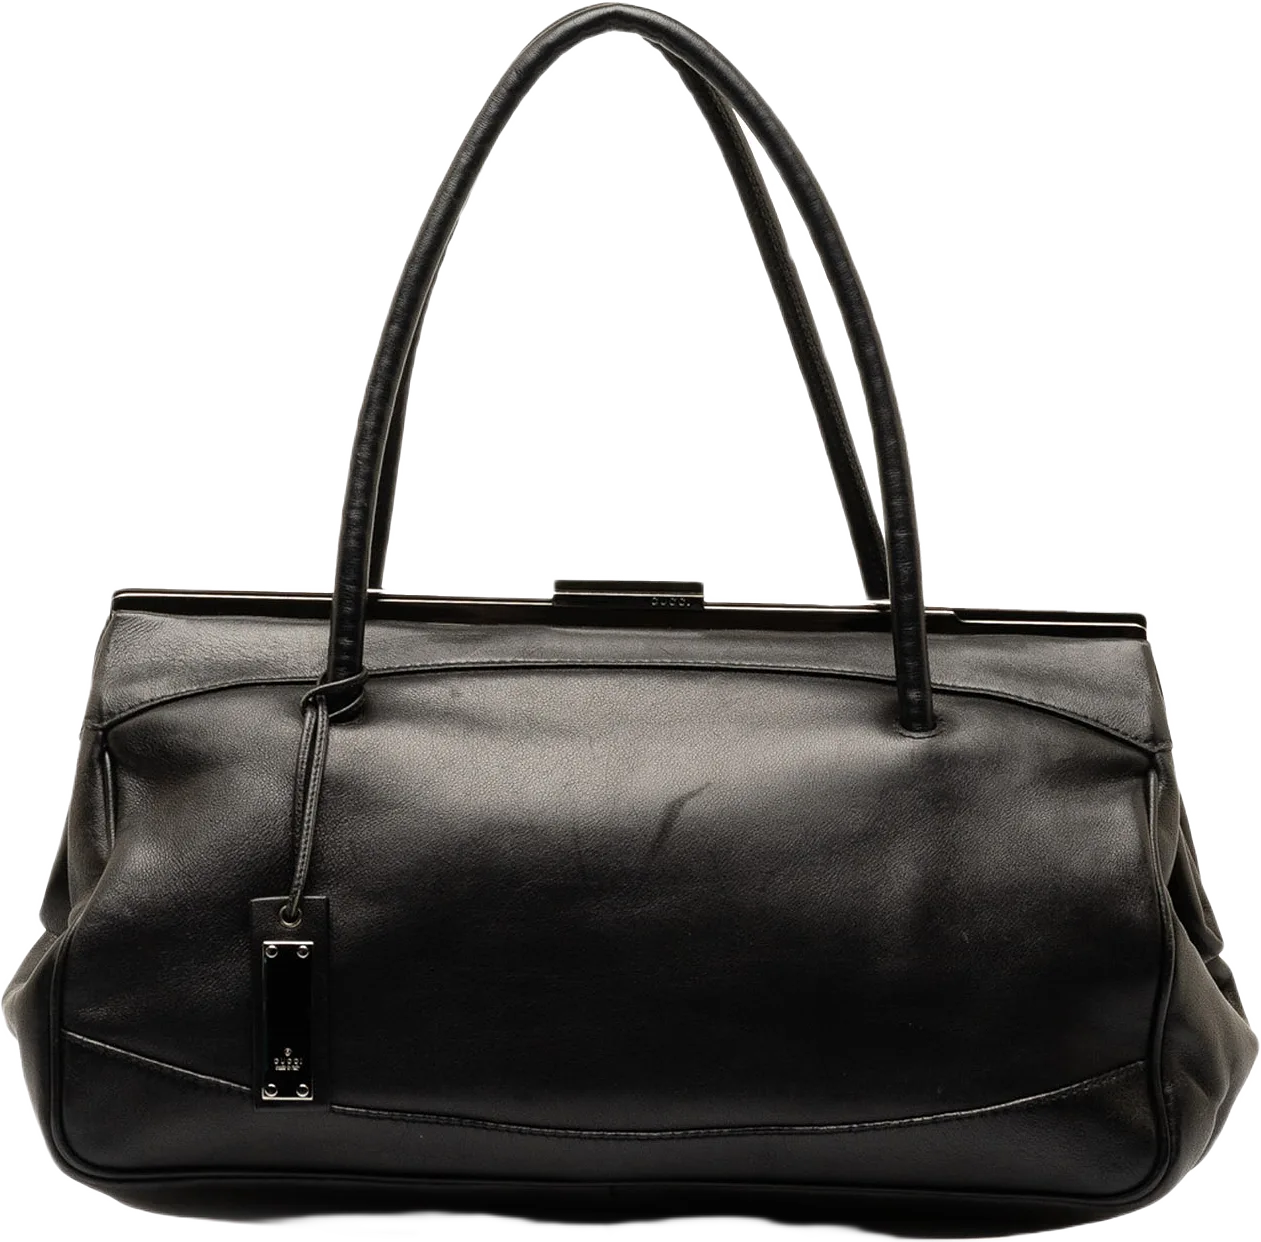 Gucci Leather Frame Handbag